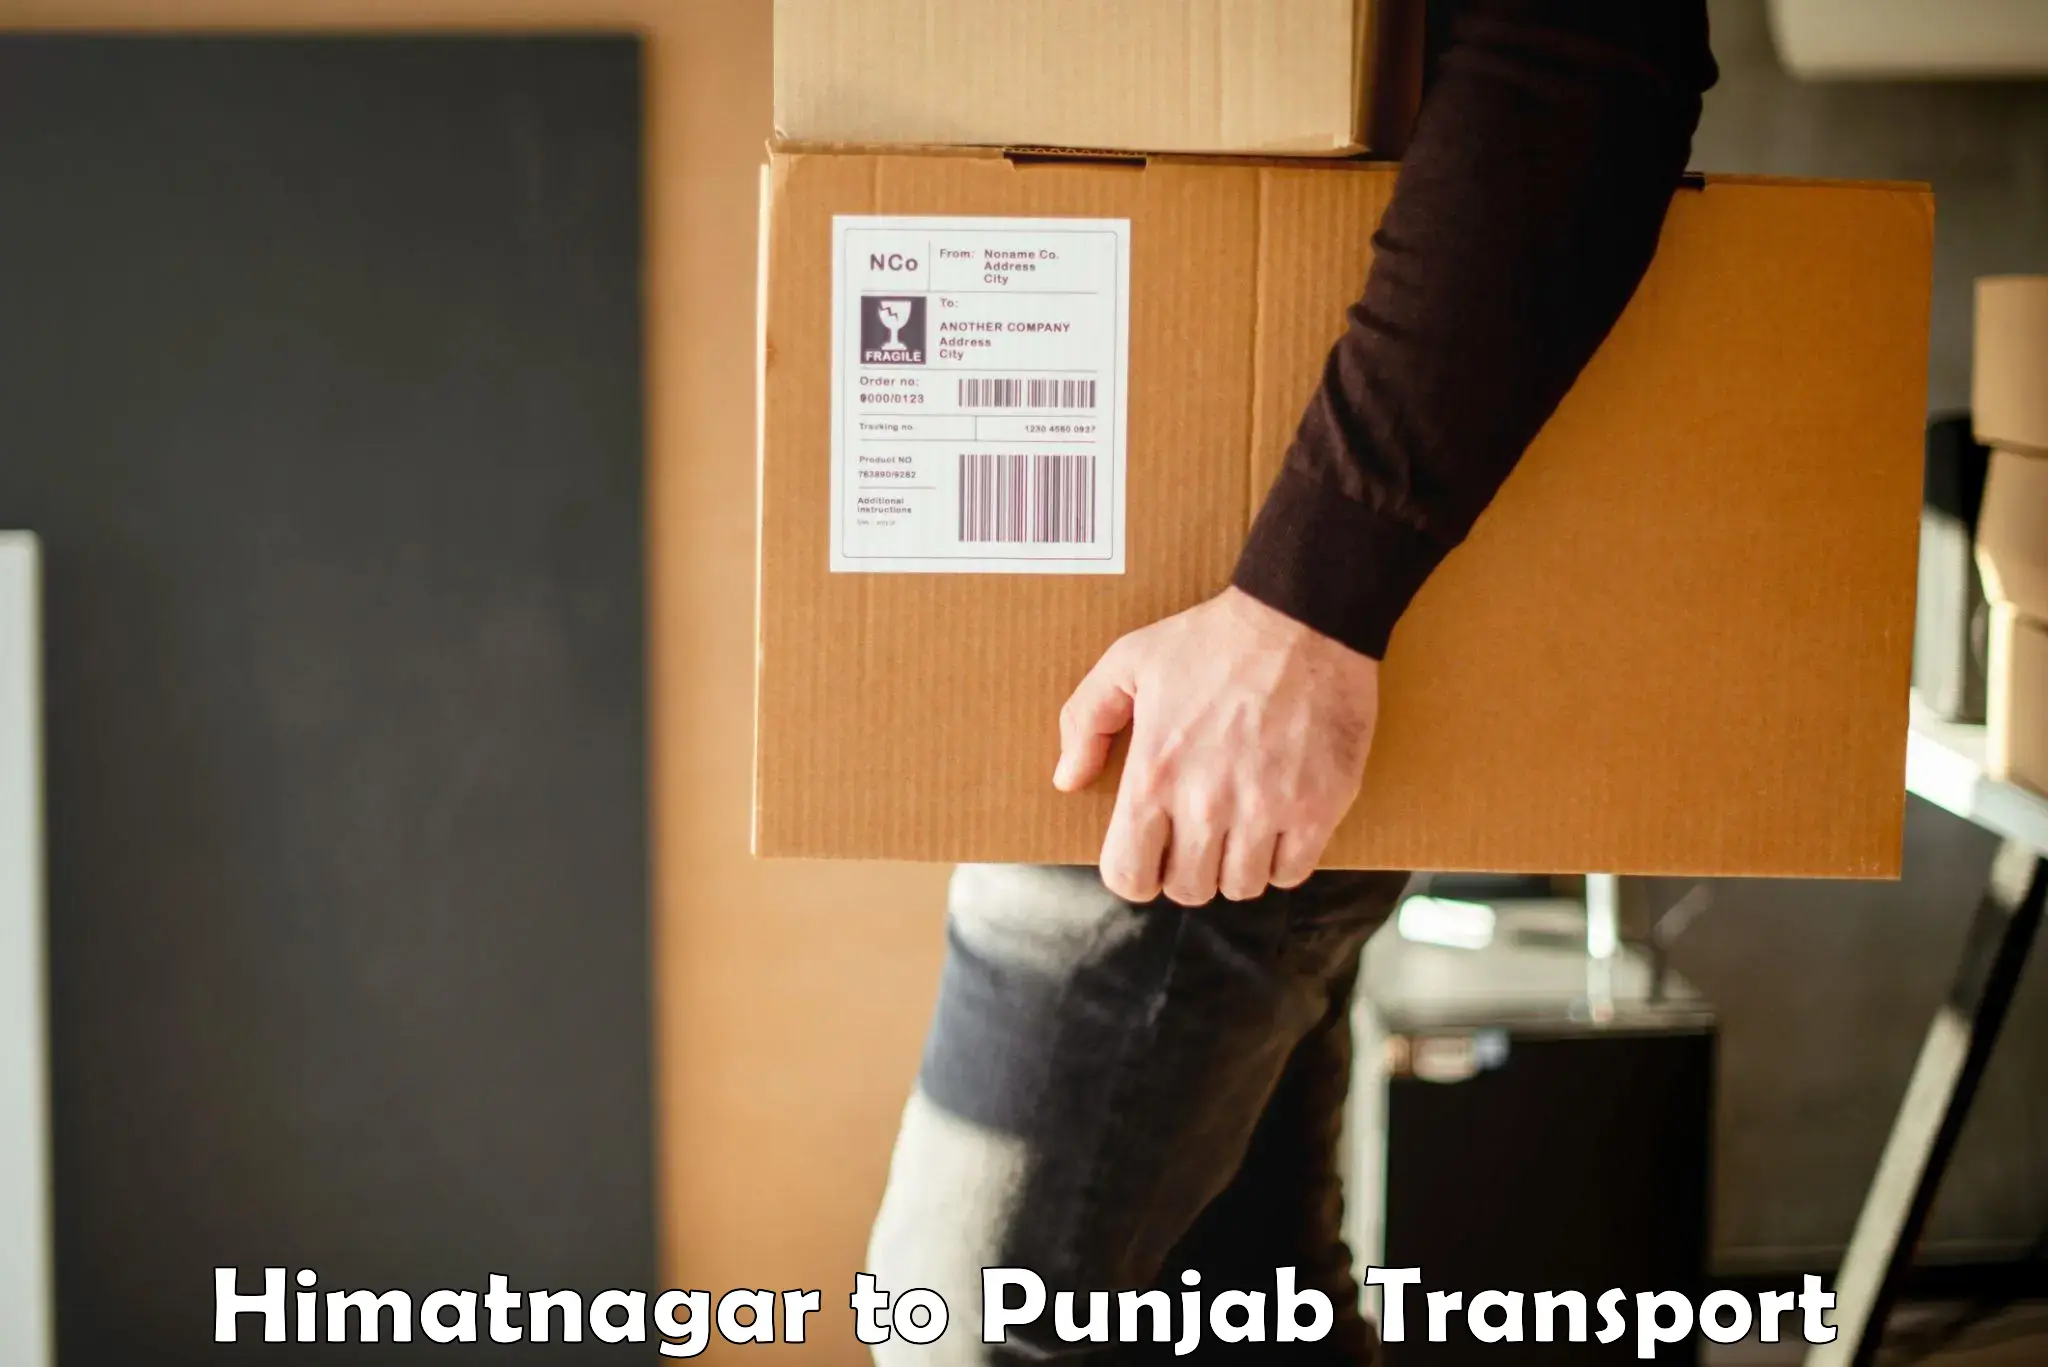 Shipping partner Himatnagar to Ajnala